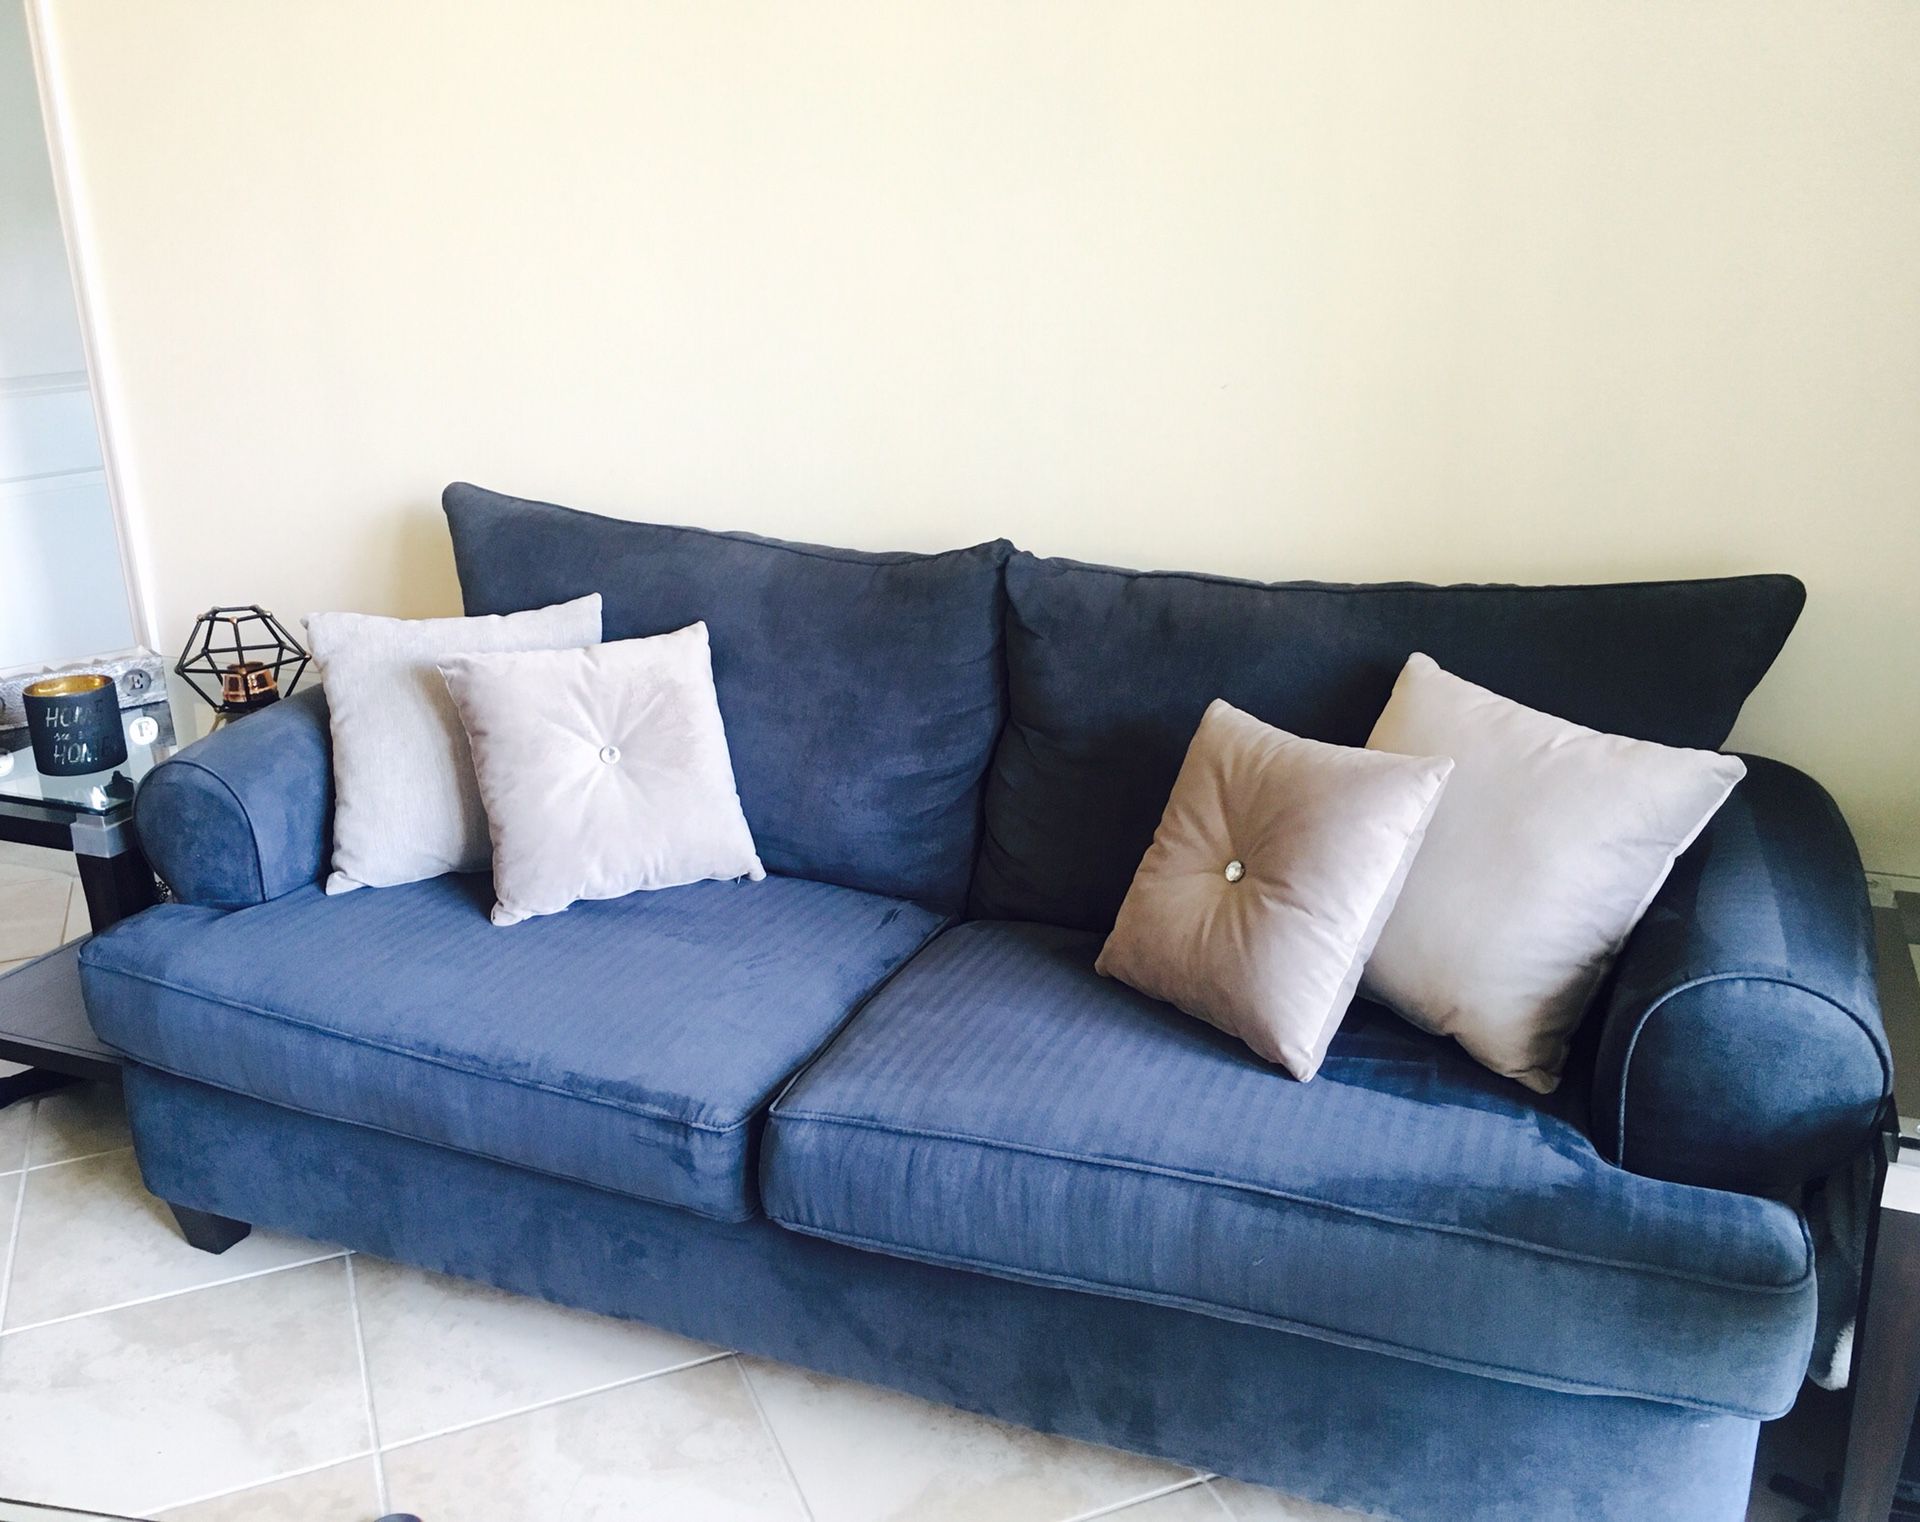 Super comfy blue sofa couch